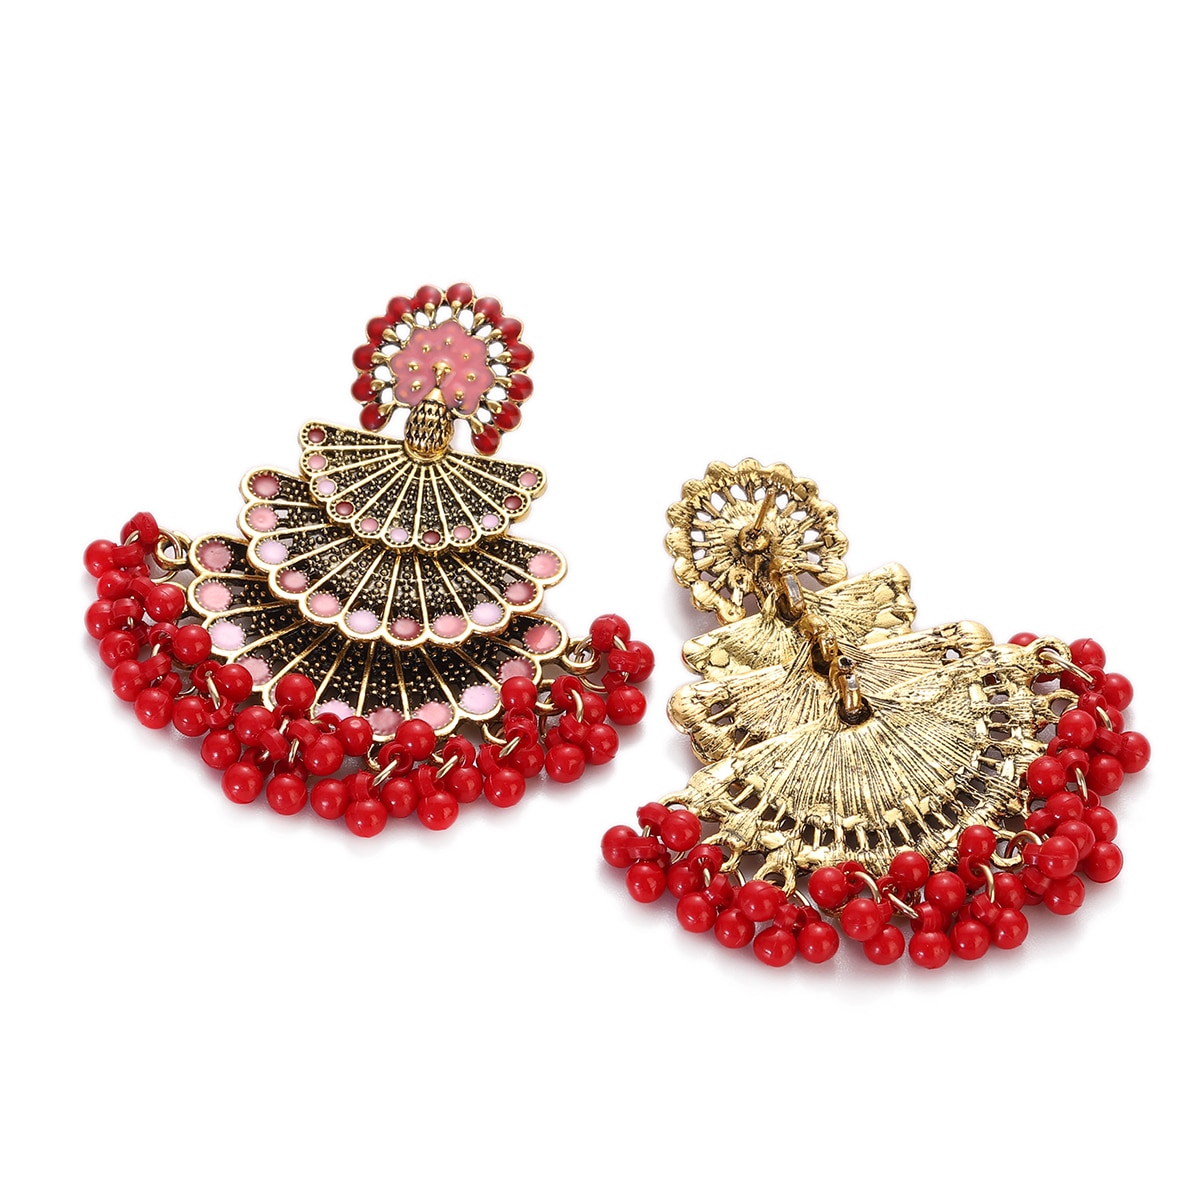 Indian-Jewellery-Red-White-Sector-Jhumka-Earrings-For-Women-Orecchini-Retro-Pearl-Beads-Tassel-Earri-1005004587102350-6